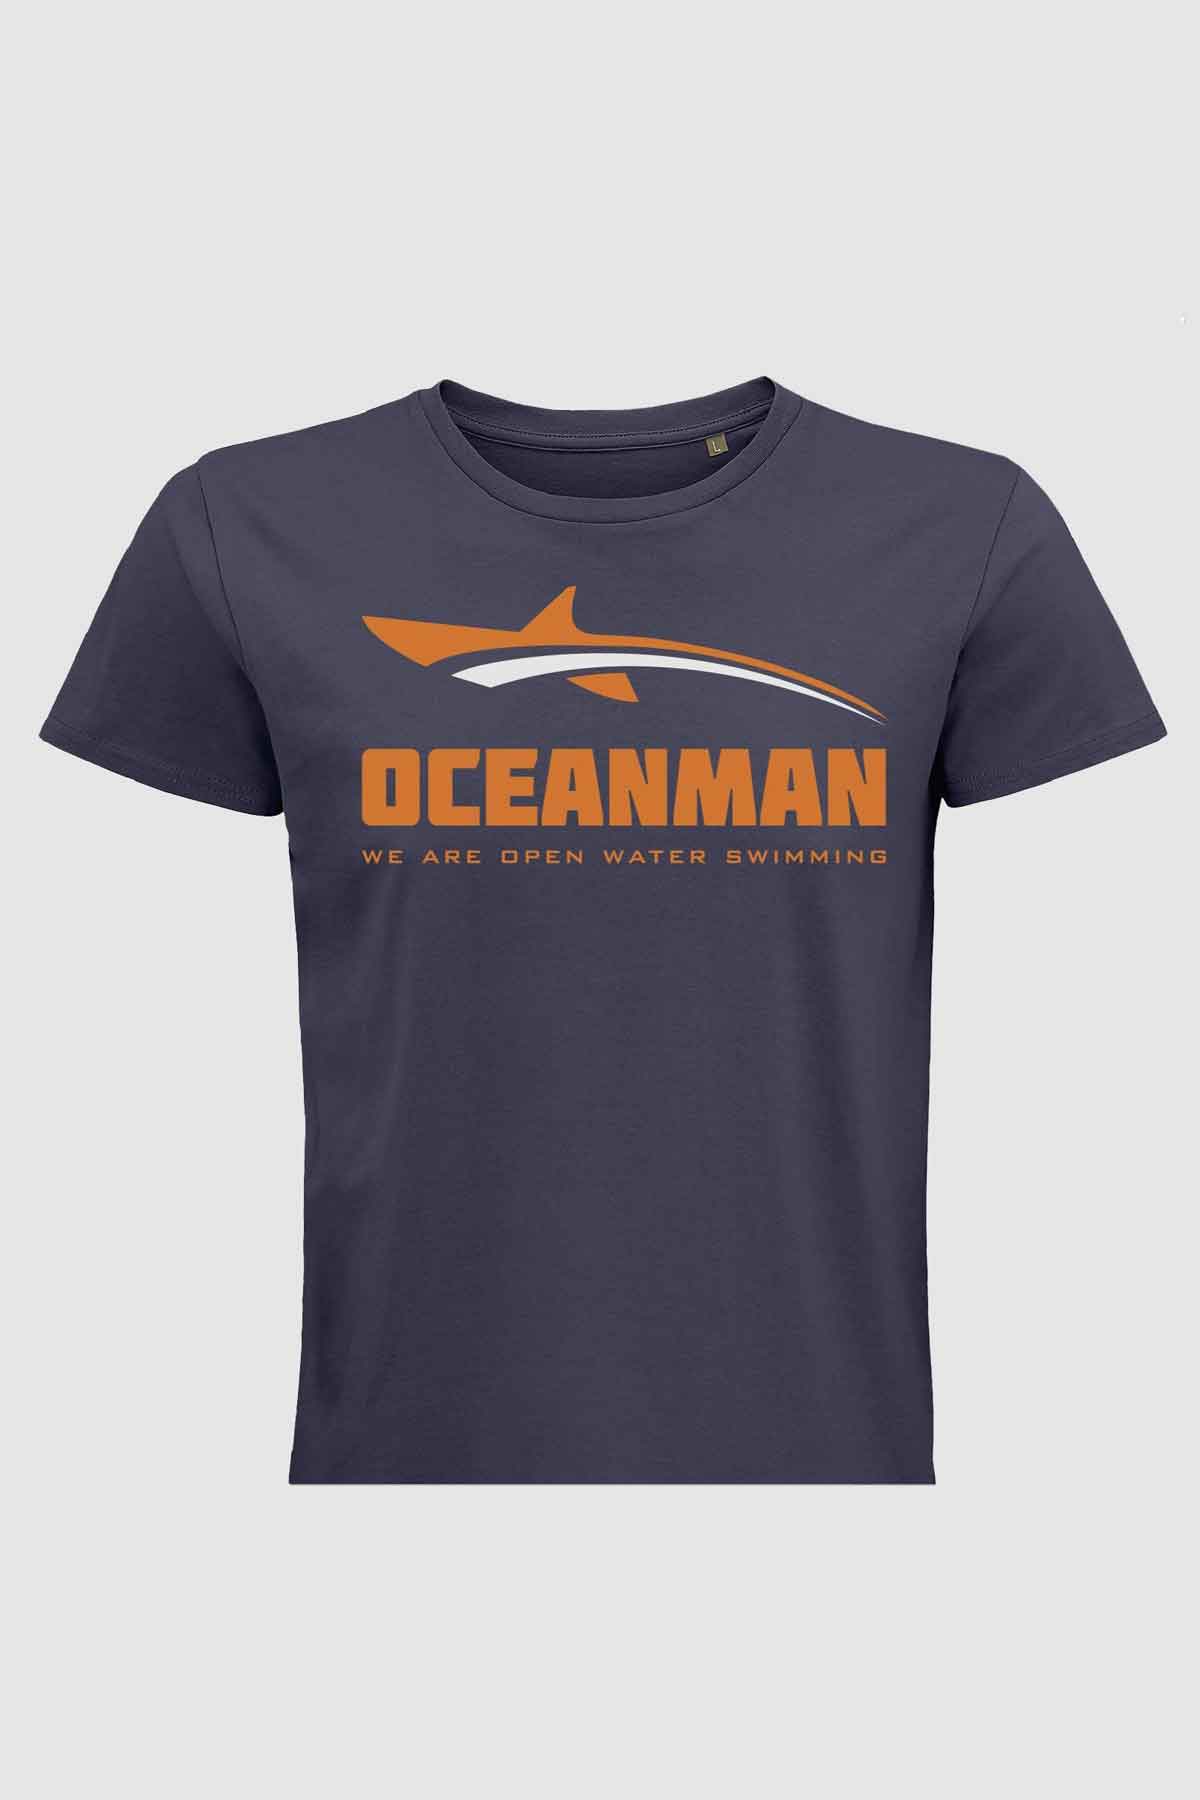 Oceanman icon t shirt dark grey men